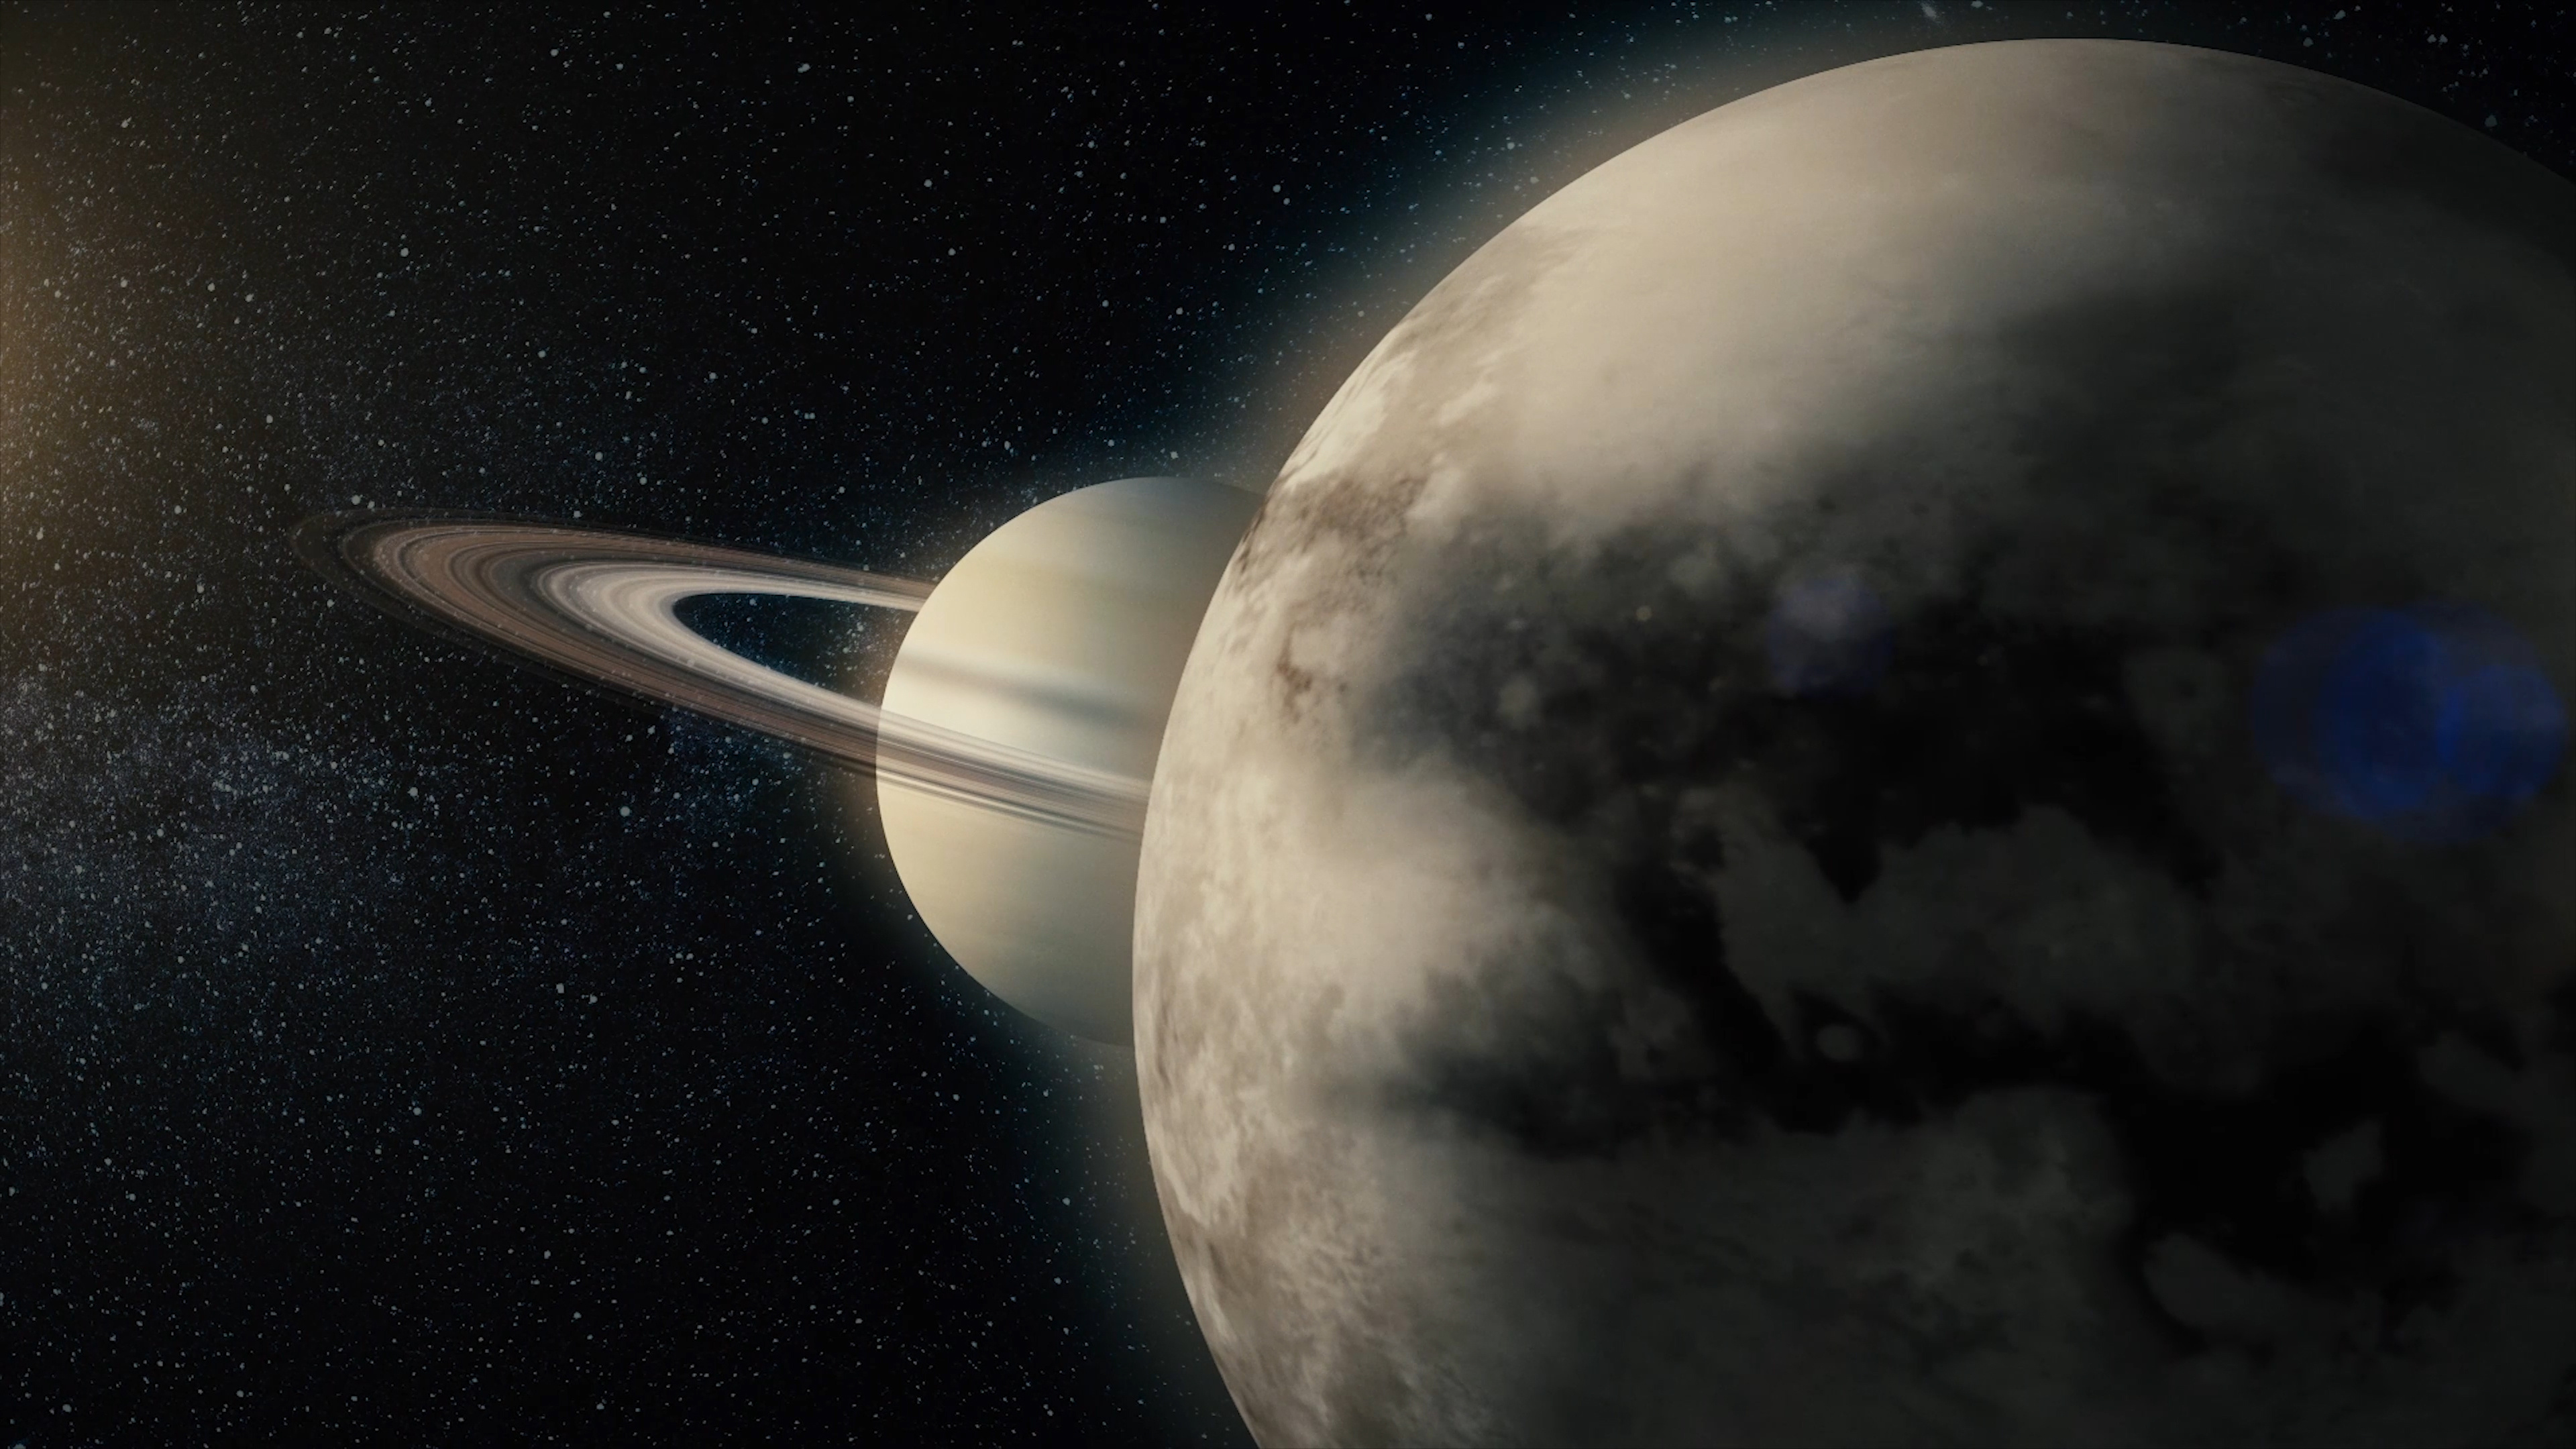 Représentation de Saturne et de sa lune Titan. © Media Whalestock, Adobe Stock